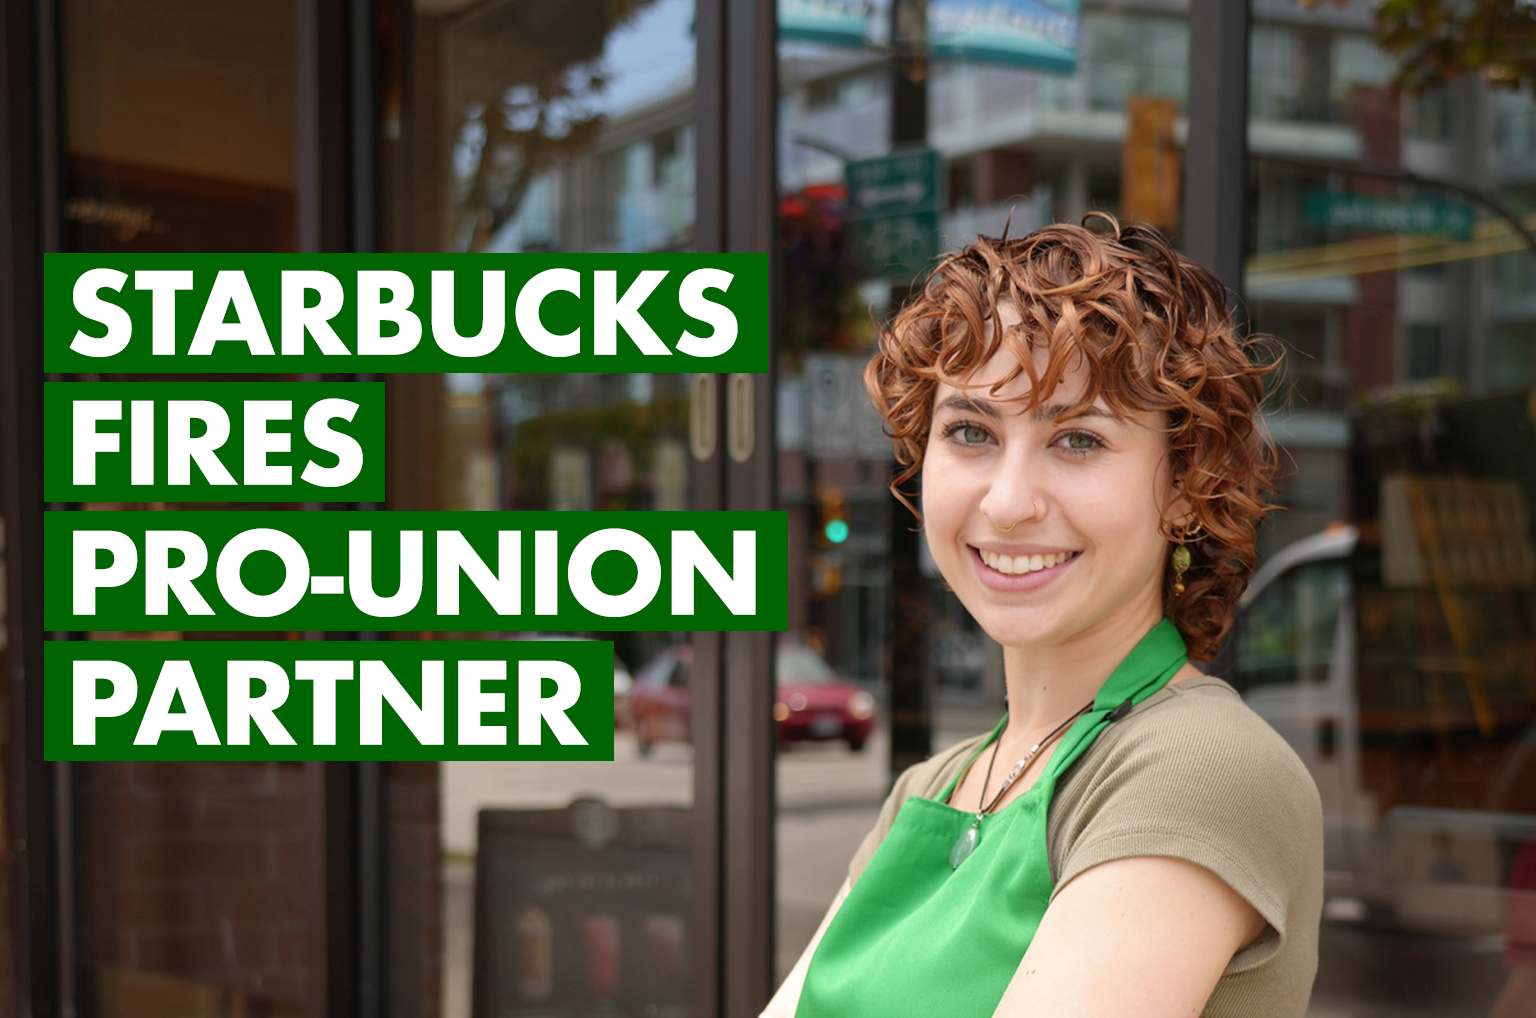 Starbucks Fires Pro-Union Partner